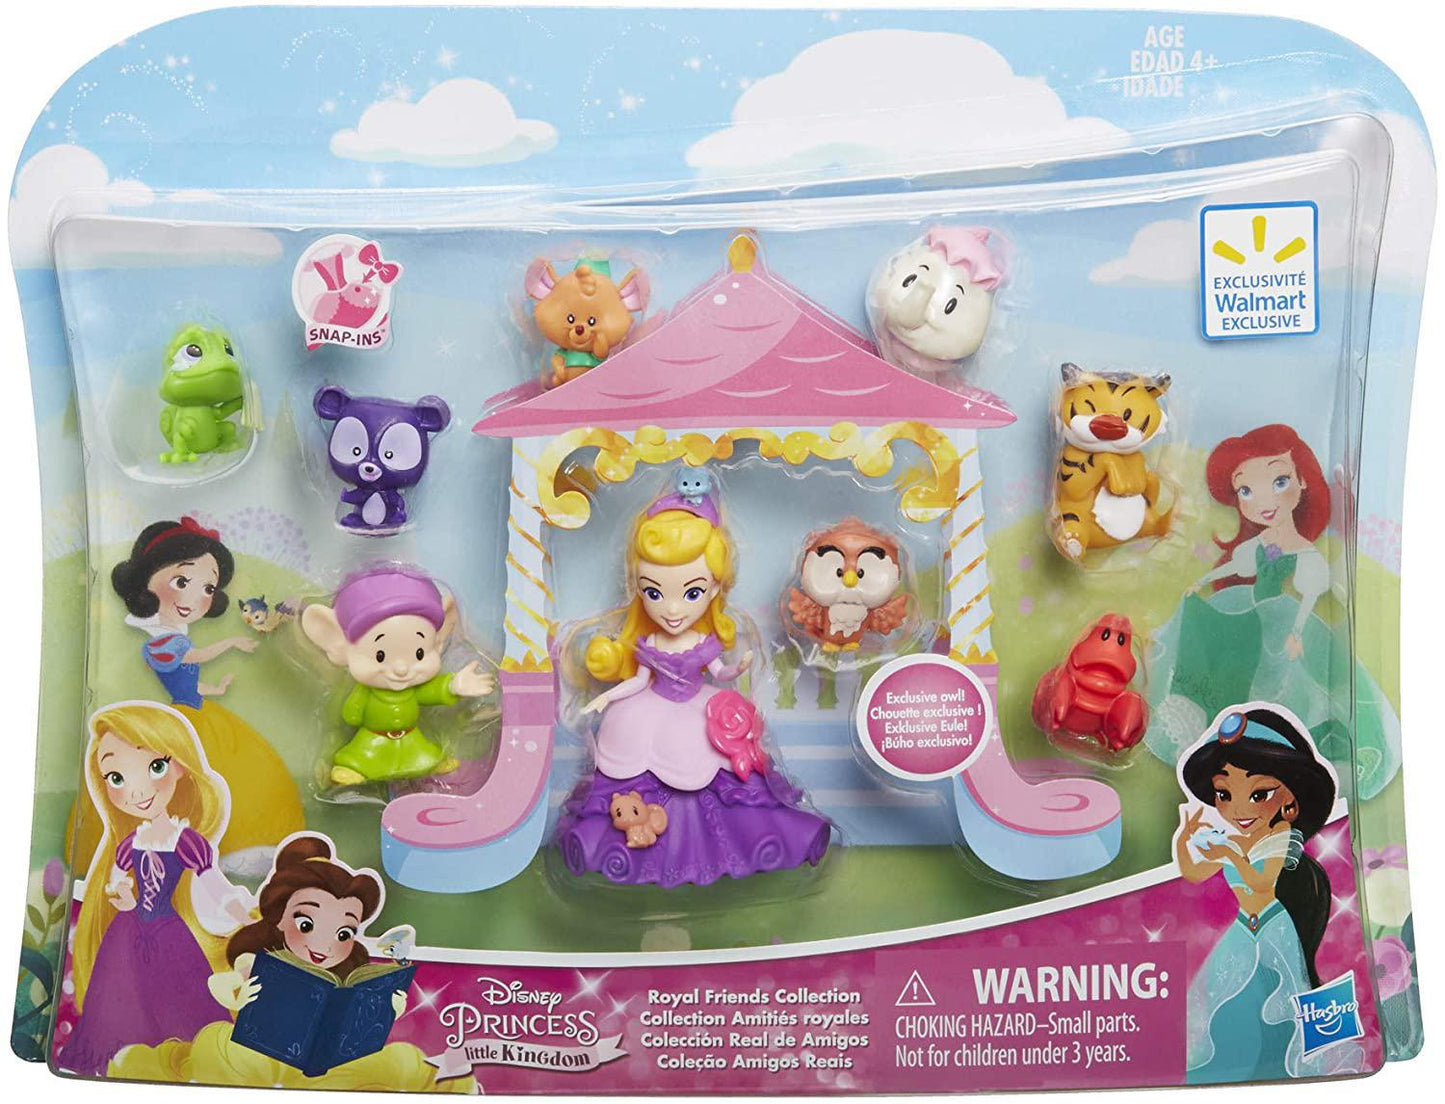 Little Kingdom Disney Princess Royal Friends Collection - 9-Piece set includes Aurora, Pascal, Dopey, Gus, Rajahah and more